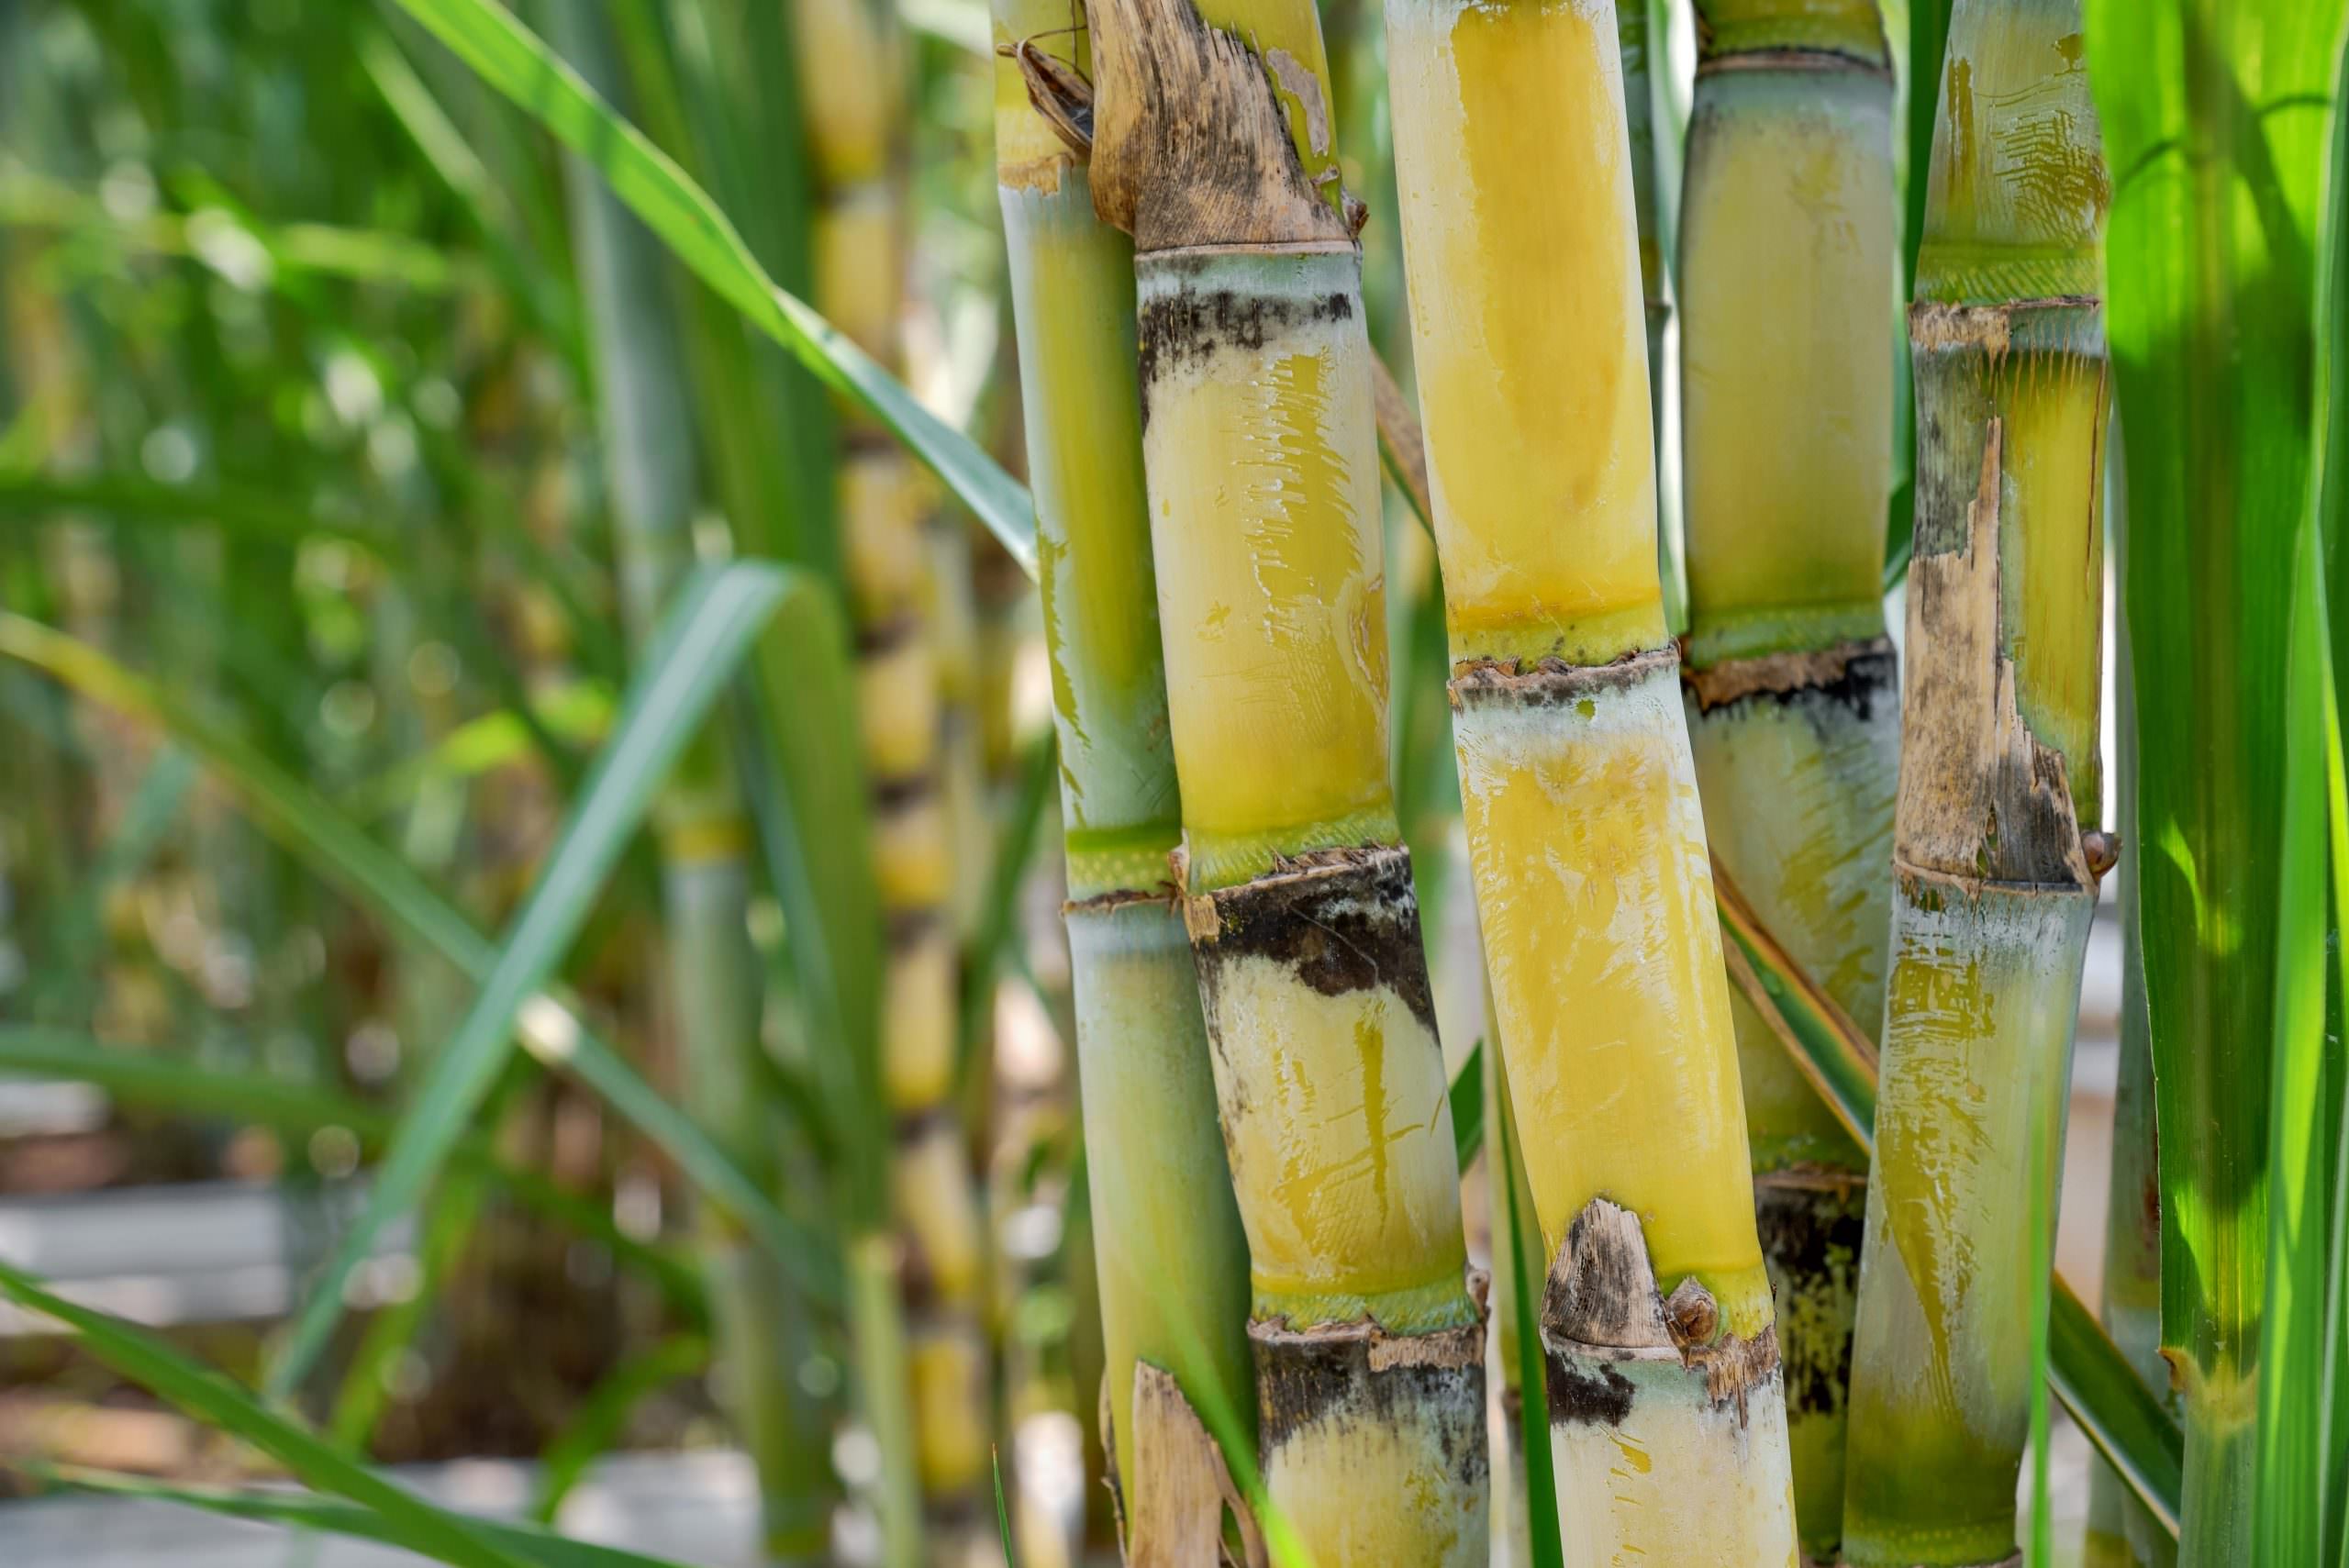 Sugarcane in a field